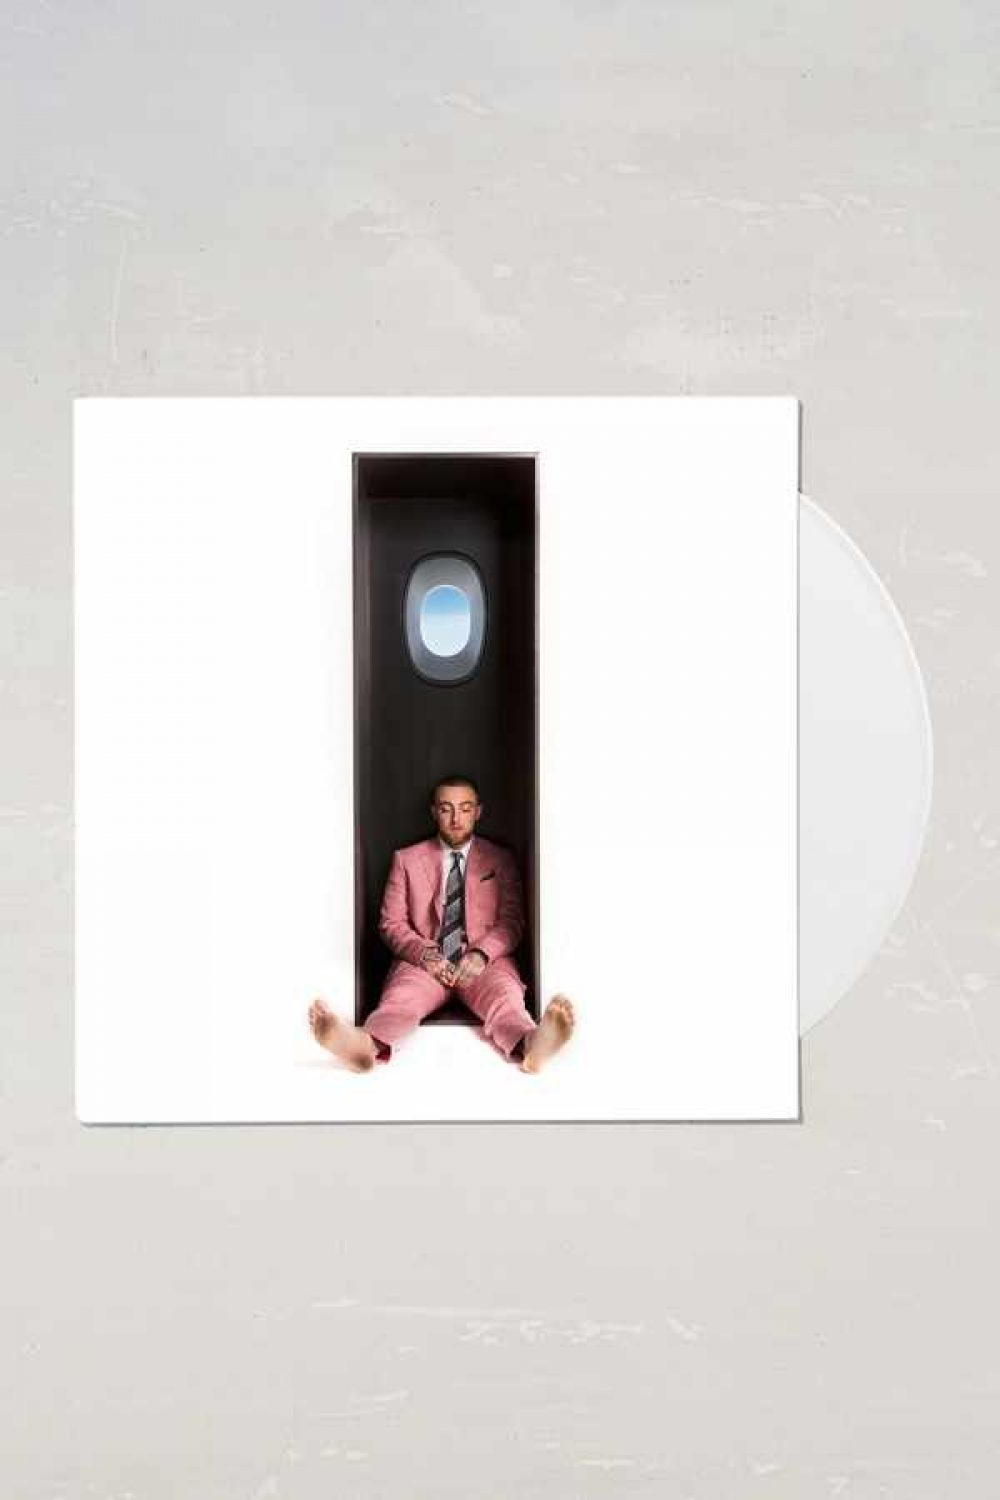 Mac Miller | Vinyl Record